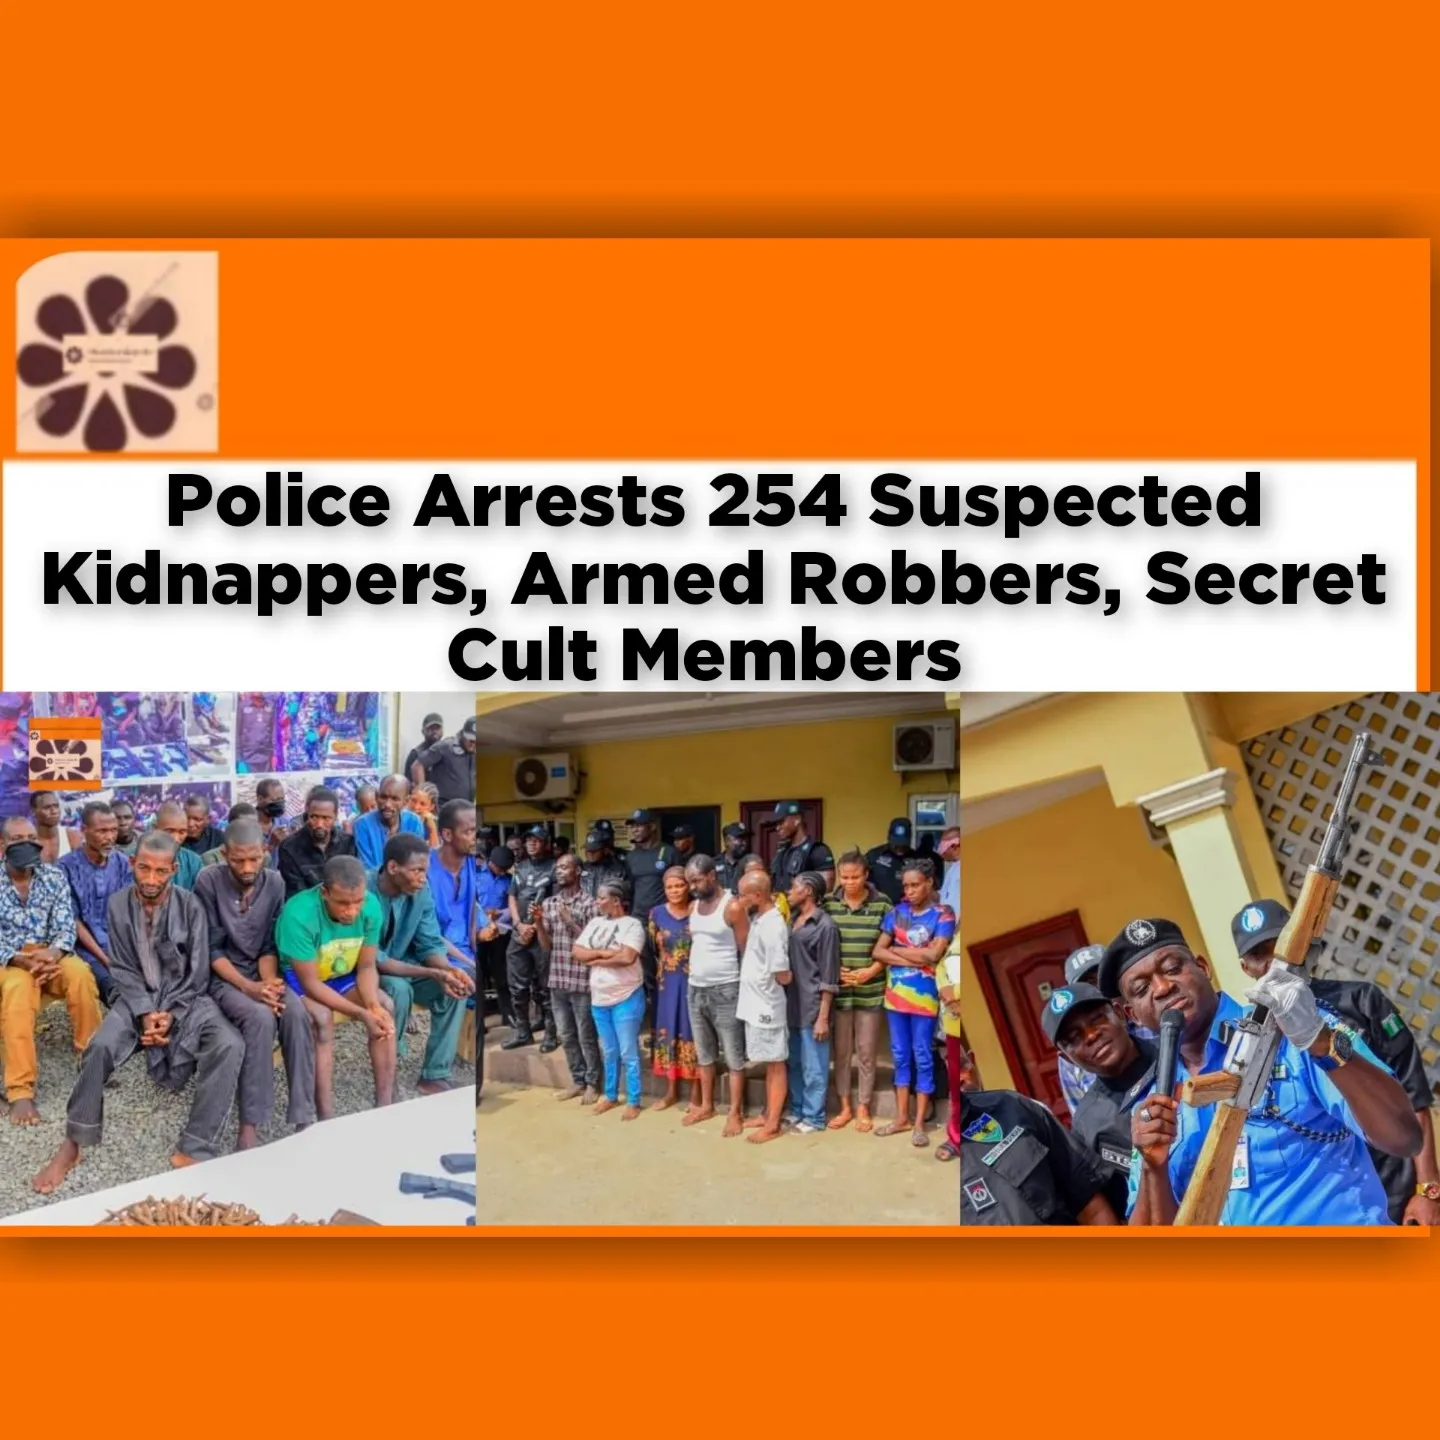 Police Arrests 254 Suspected Kidnappers, Armed Robbers, Secret Cult Members ~ OsazuwaAkonedo ###KidnappersCultists #ArmedRobbery #Jos #Police #Women